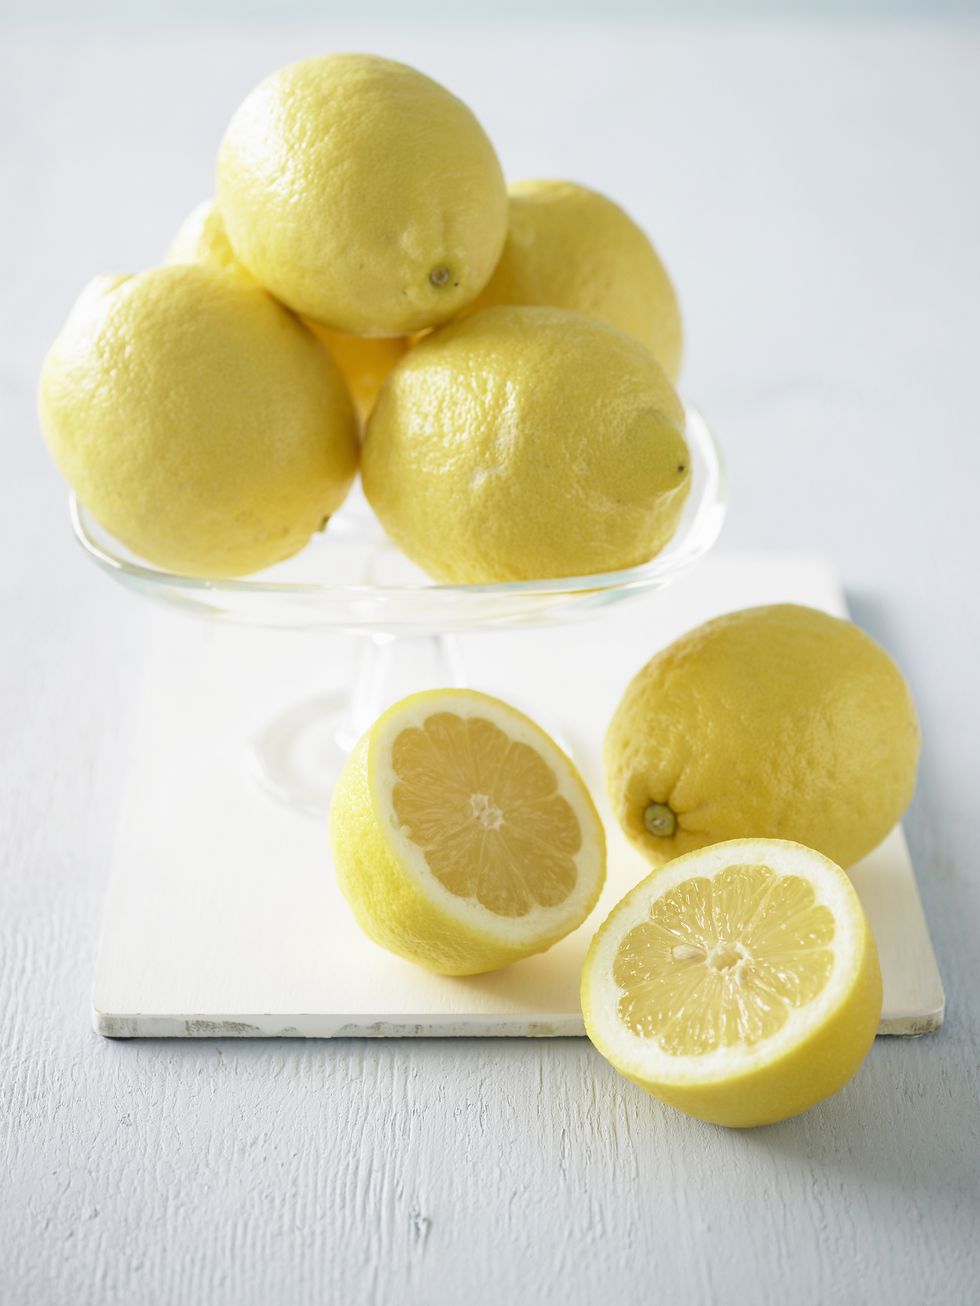 baking powder substitute lemon juice